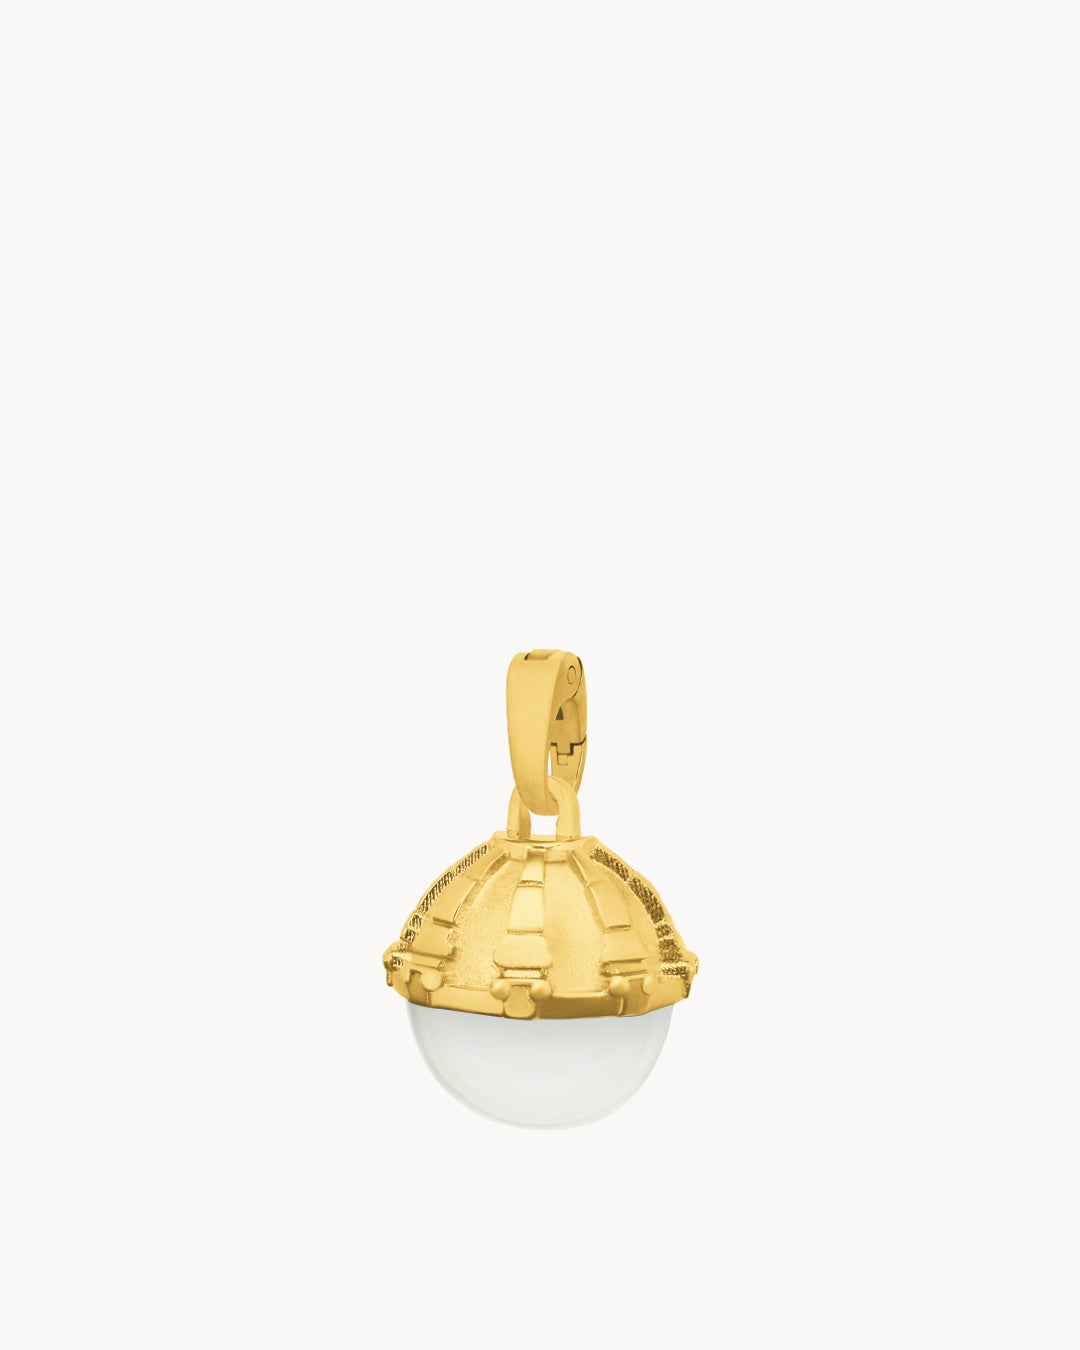 April Birthstone Dome Pendant, Gold